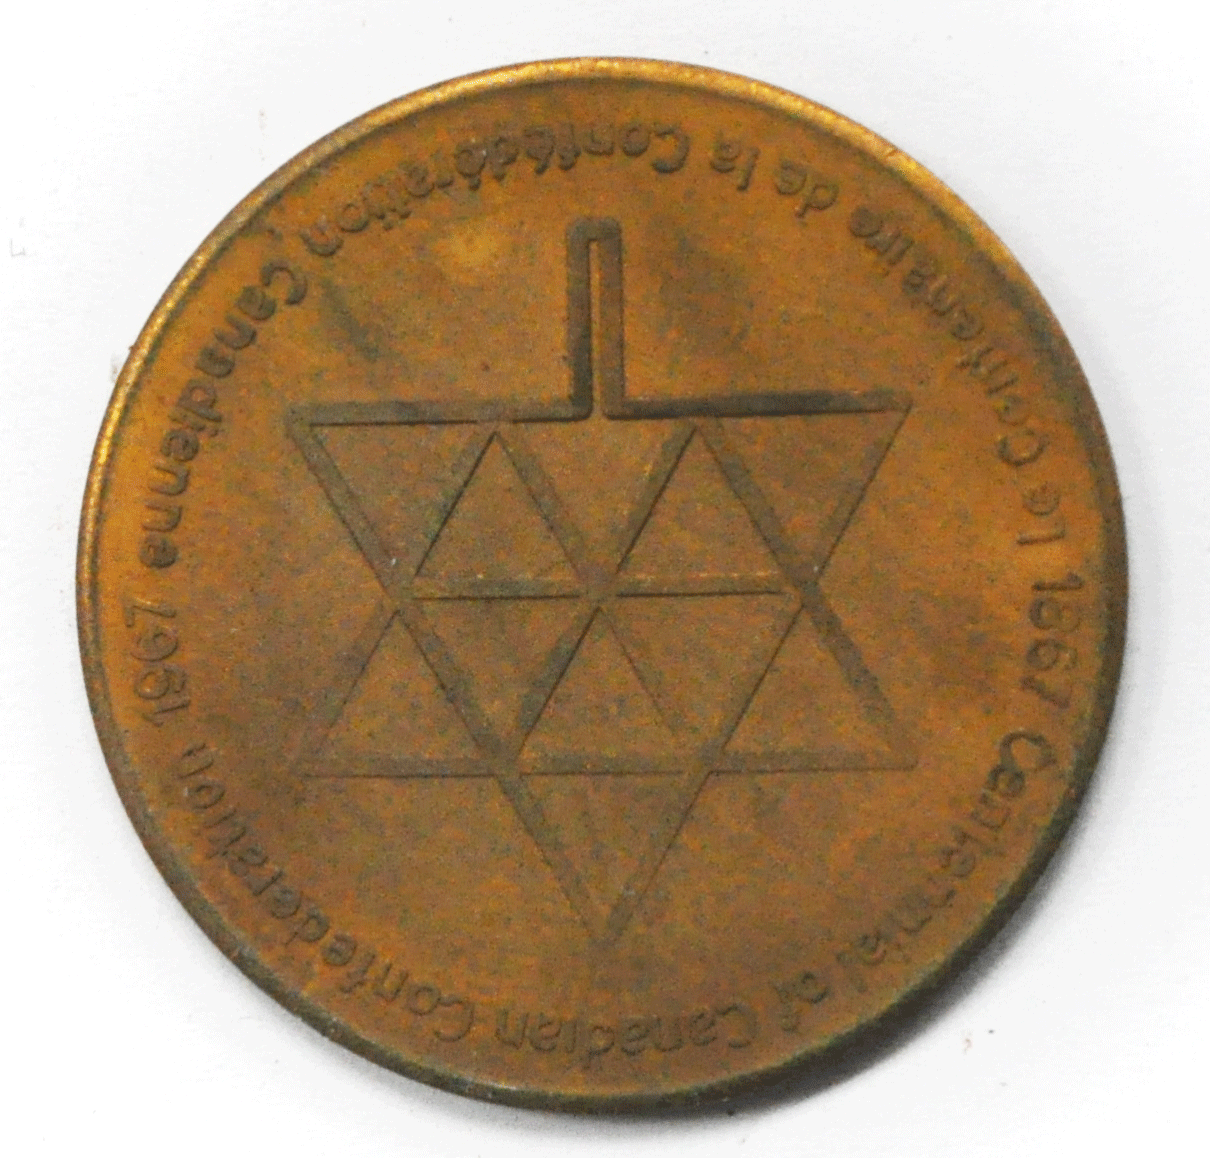 1967 Canada Centennial County of Vulcan World Wheat Area Medal 34mm